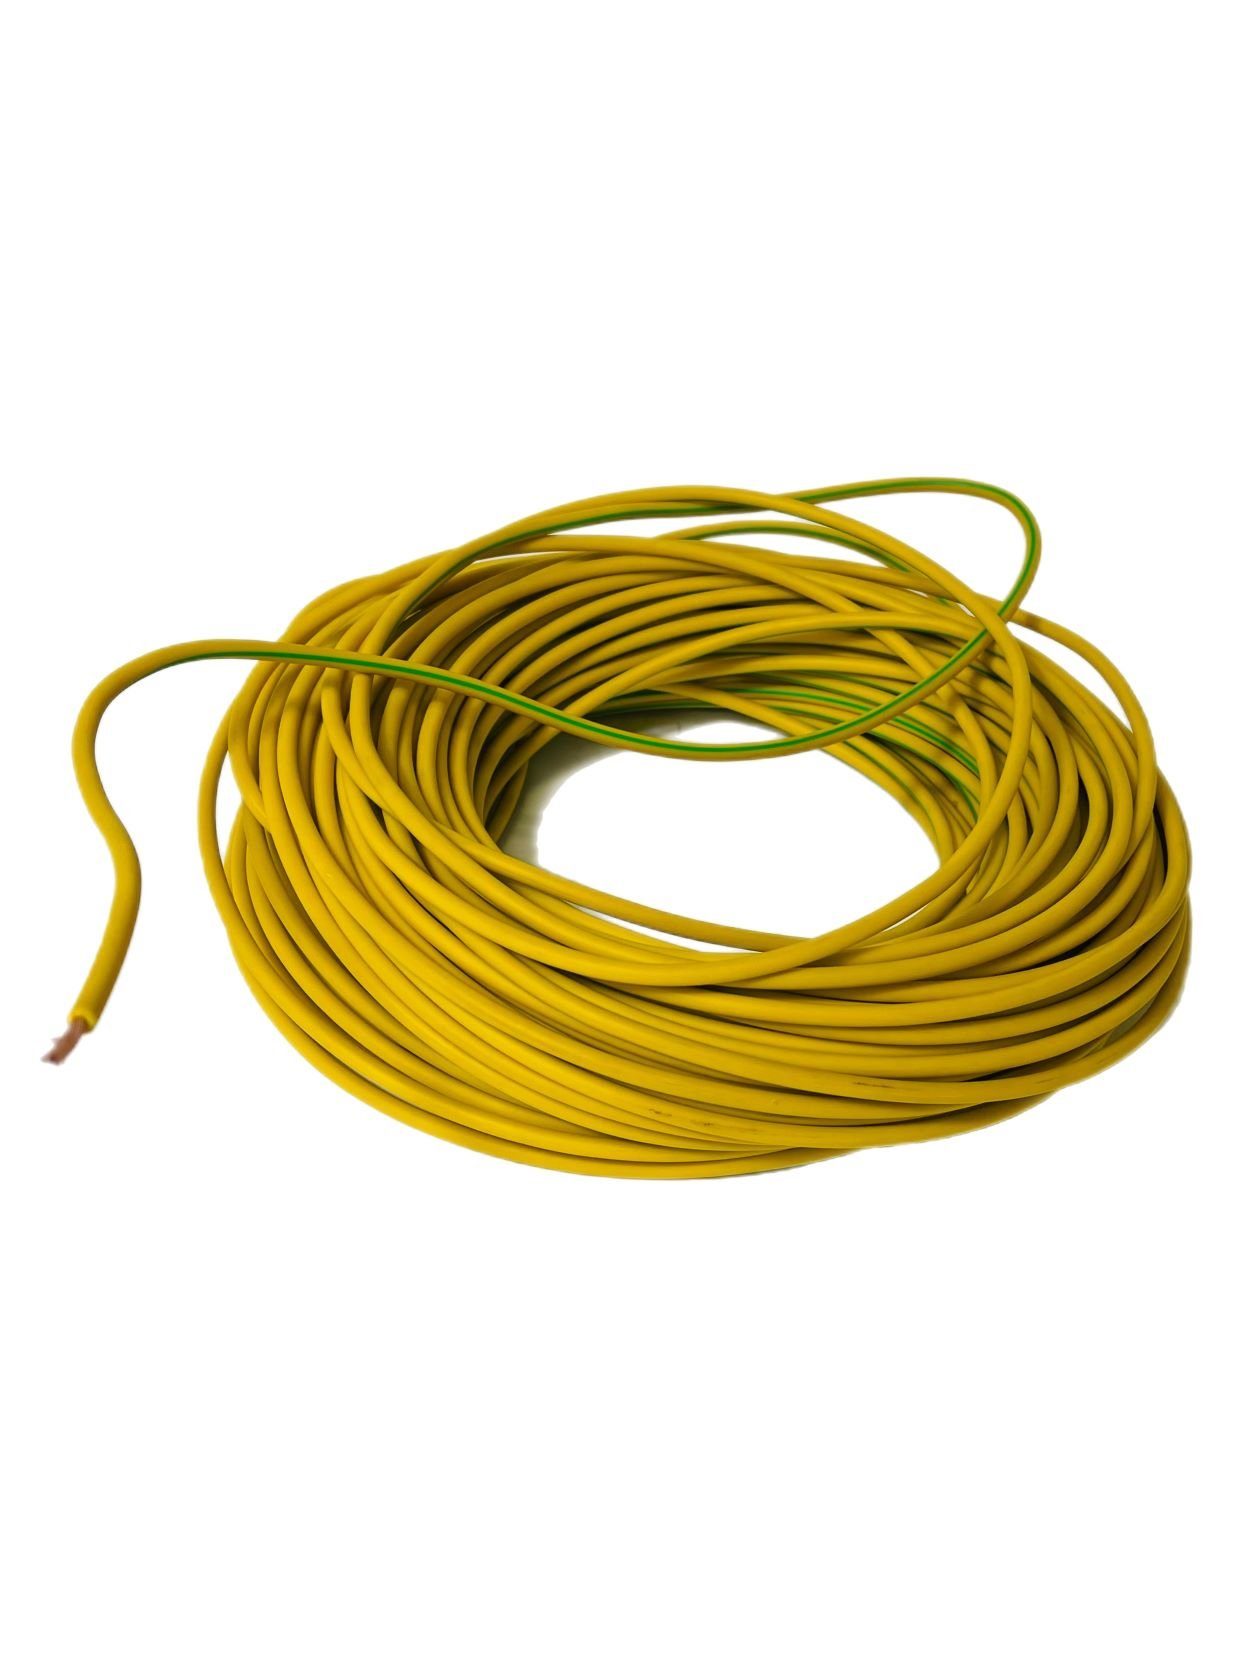 Stromkabel, H07V-K, gelb-grün 20m VaGo-Tools 10mm² Stromkabel H07V-K Batteriekabel H07VK